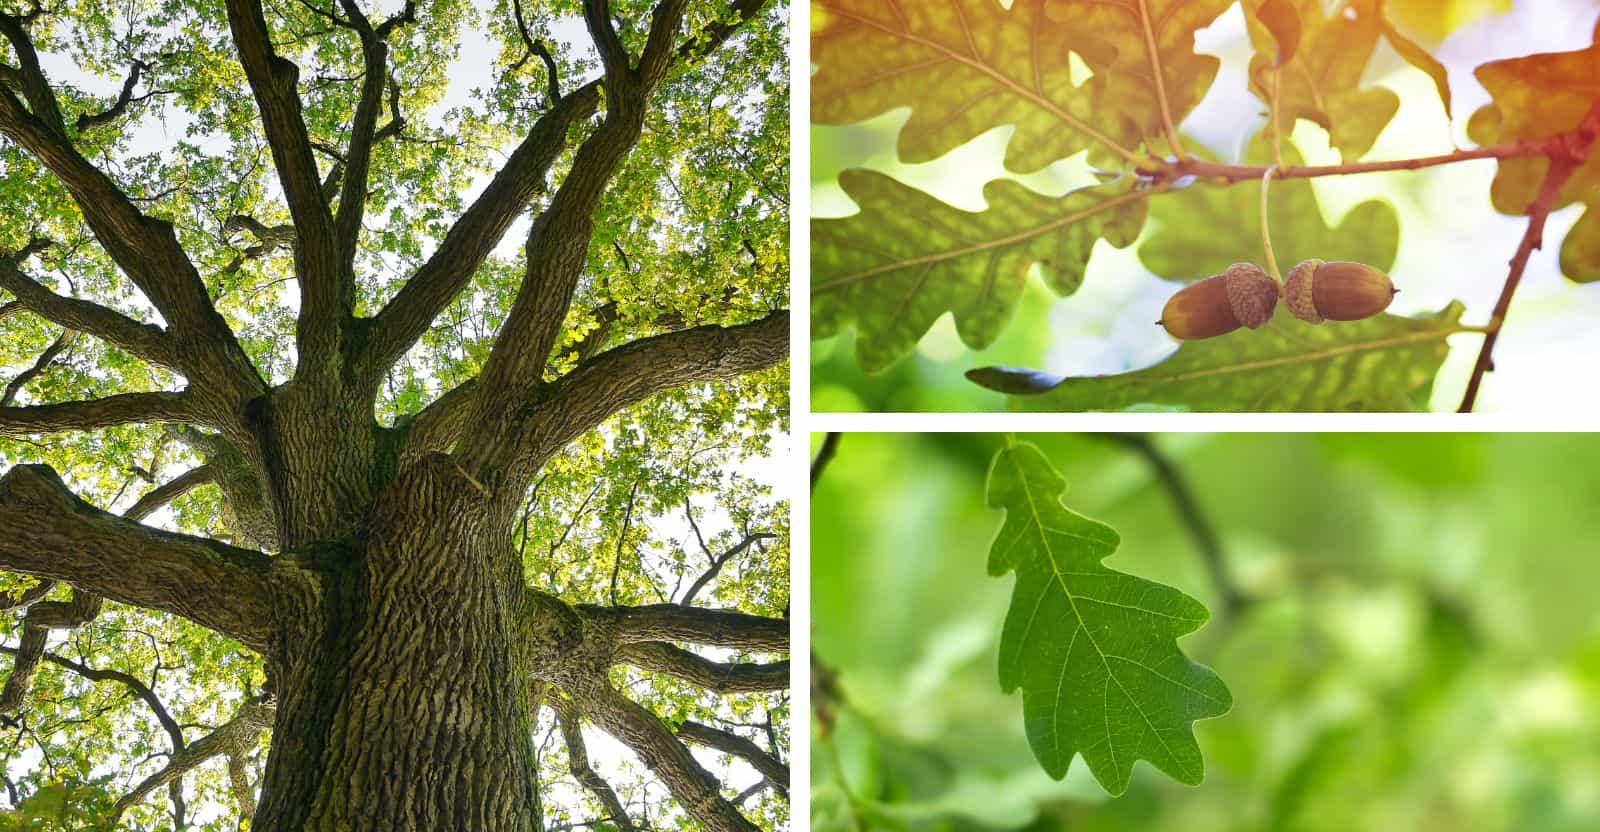 How to Identify Oak Leaves